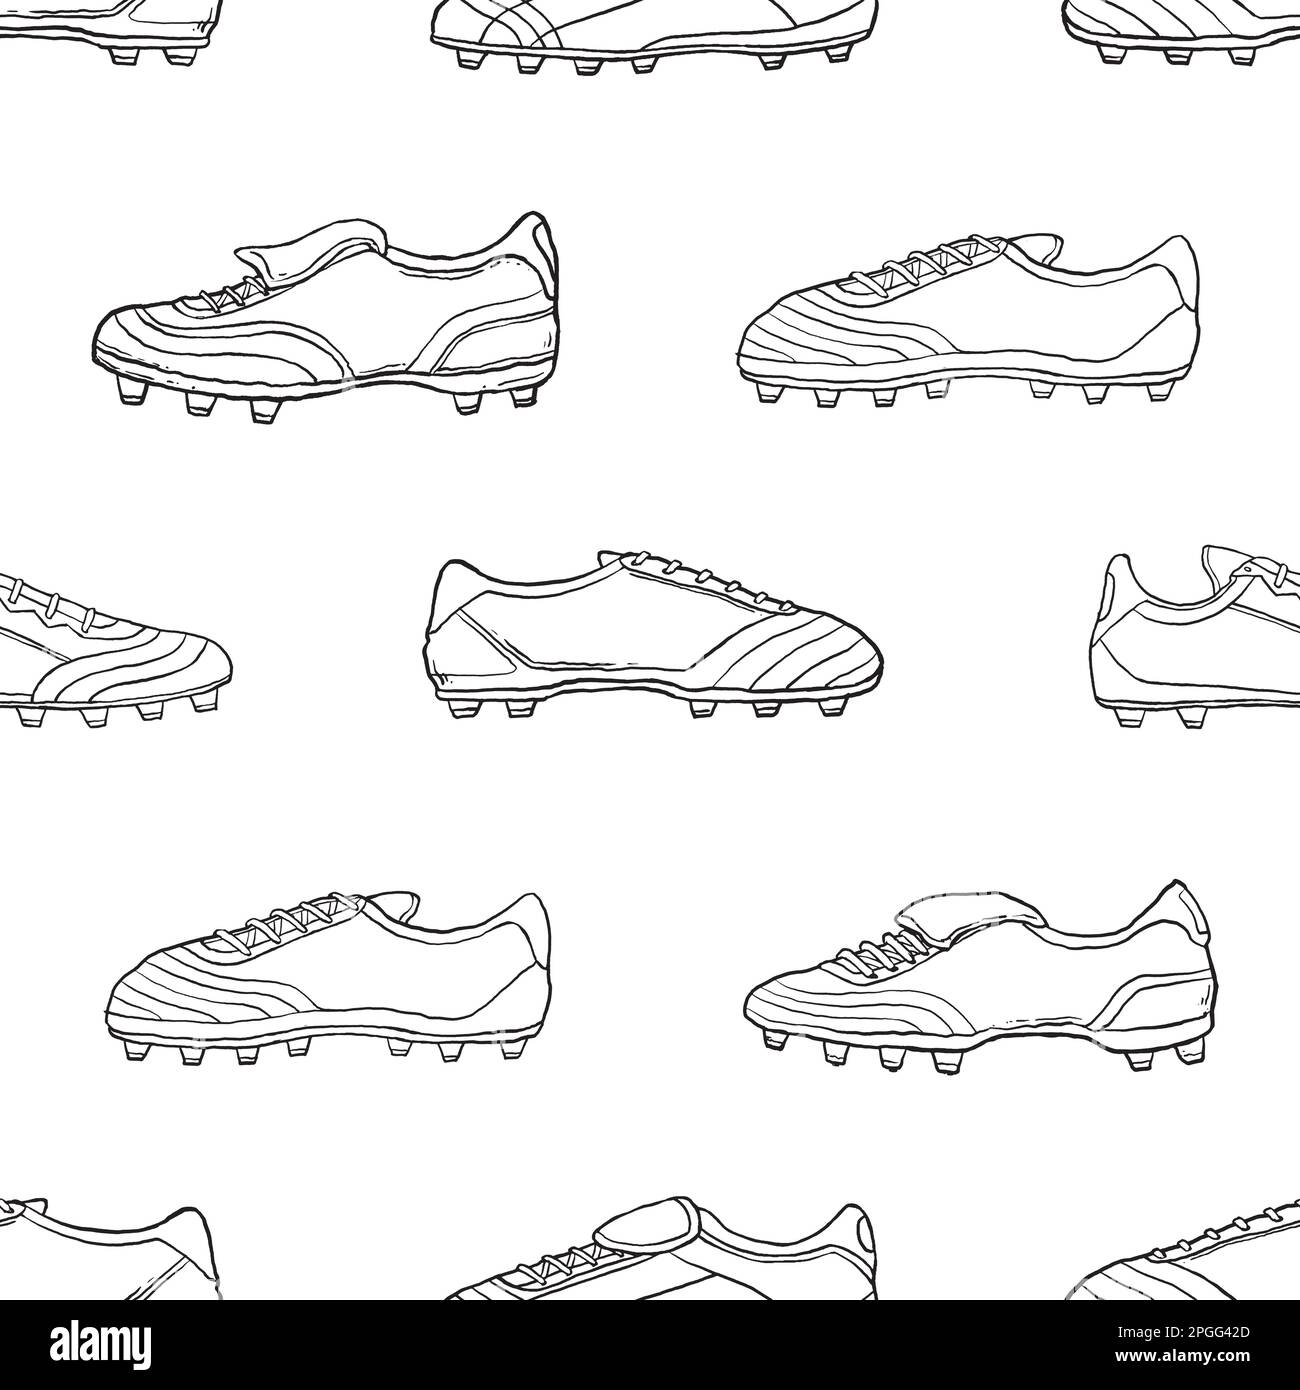 Retro Football boots doodle seamless pattern. Cartoon illustration vector illustration background. For print, textile, web, home decor, fashion, surfa Stock Vector